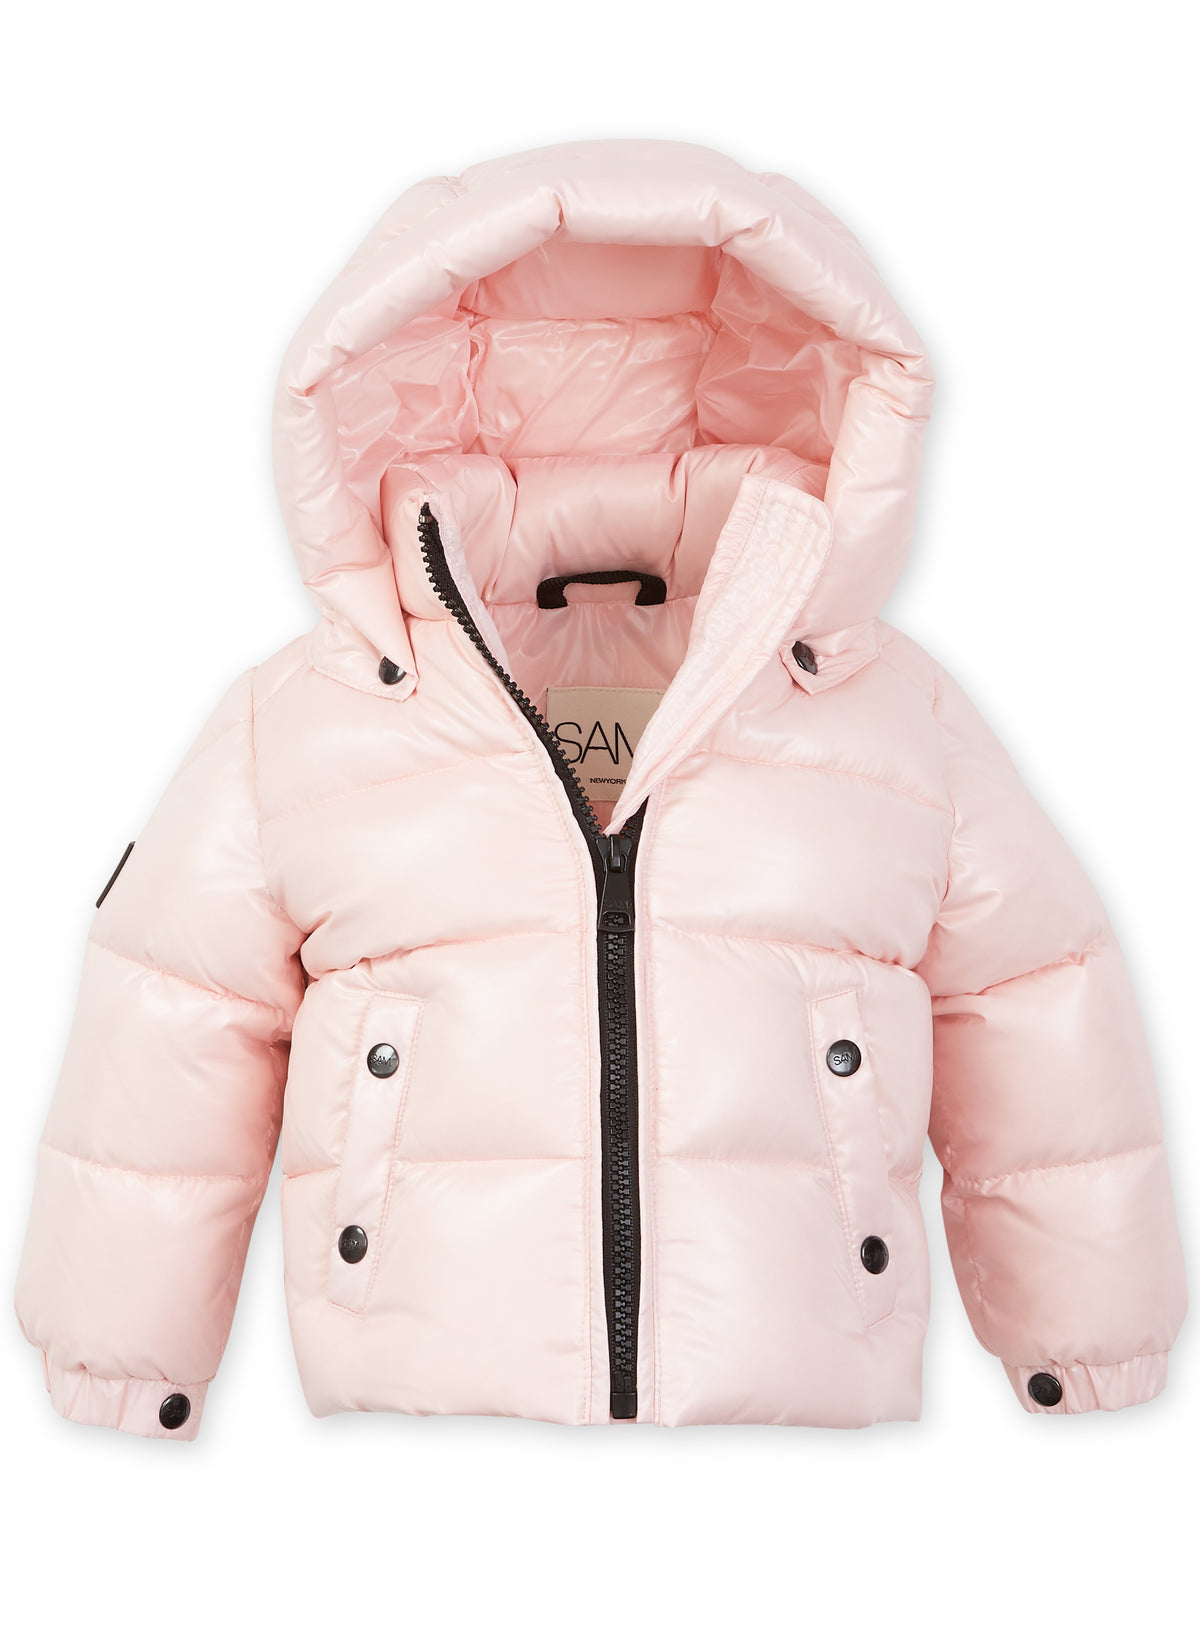 SAM. | SNOWFLURRY | Jacket/Coat